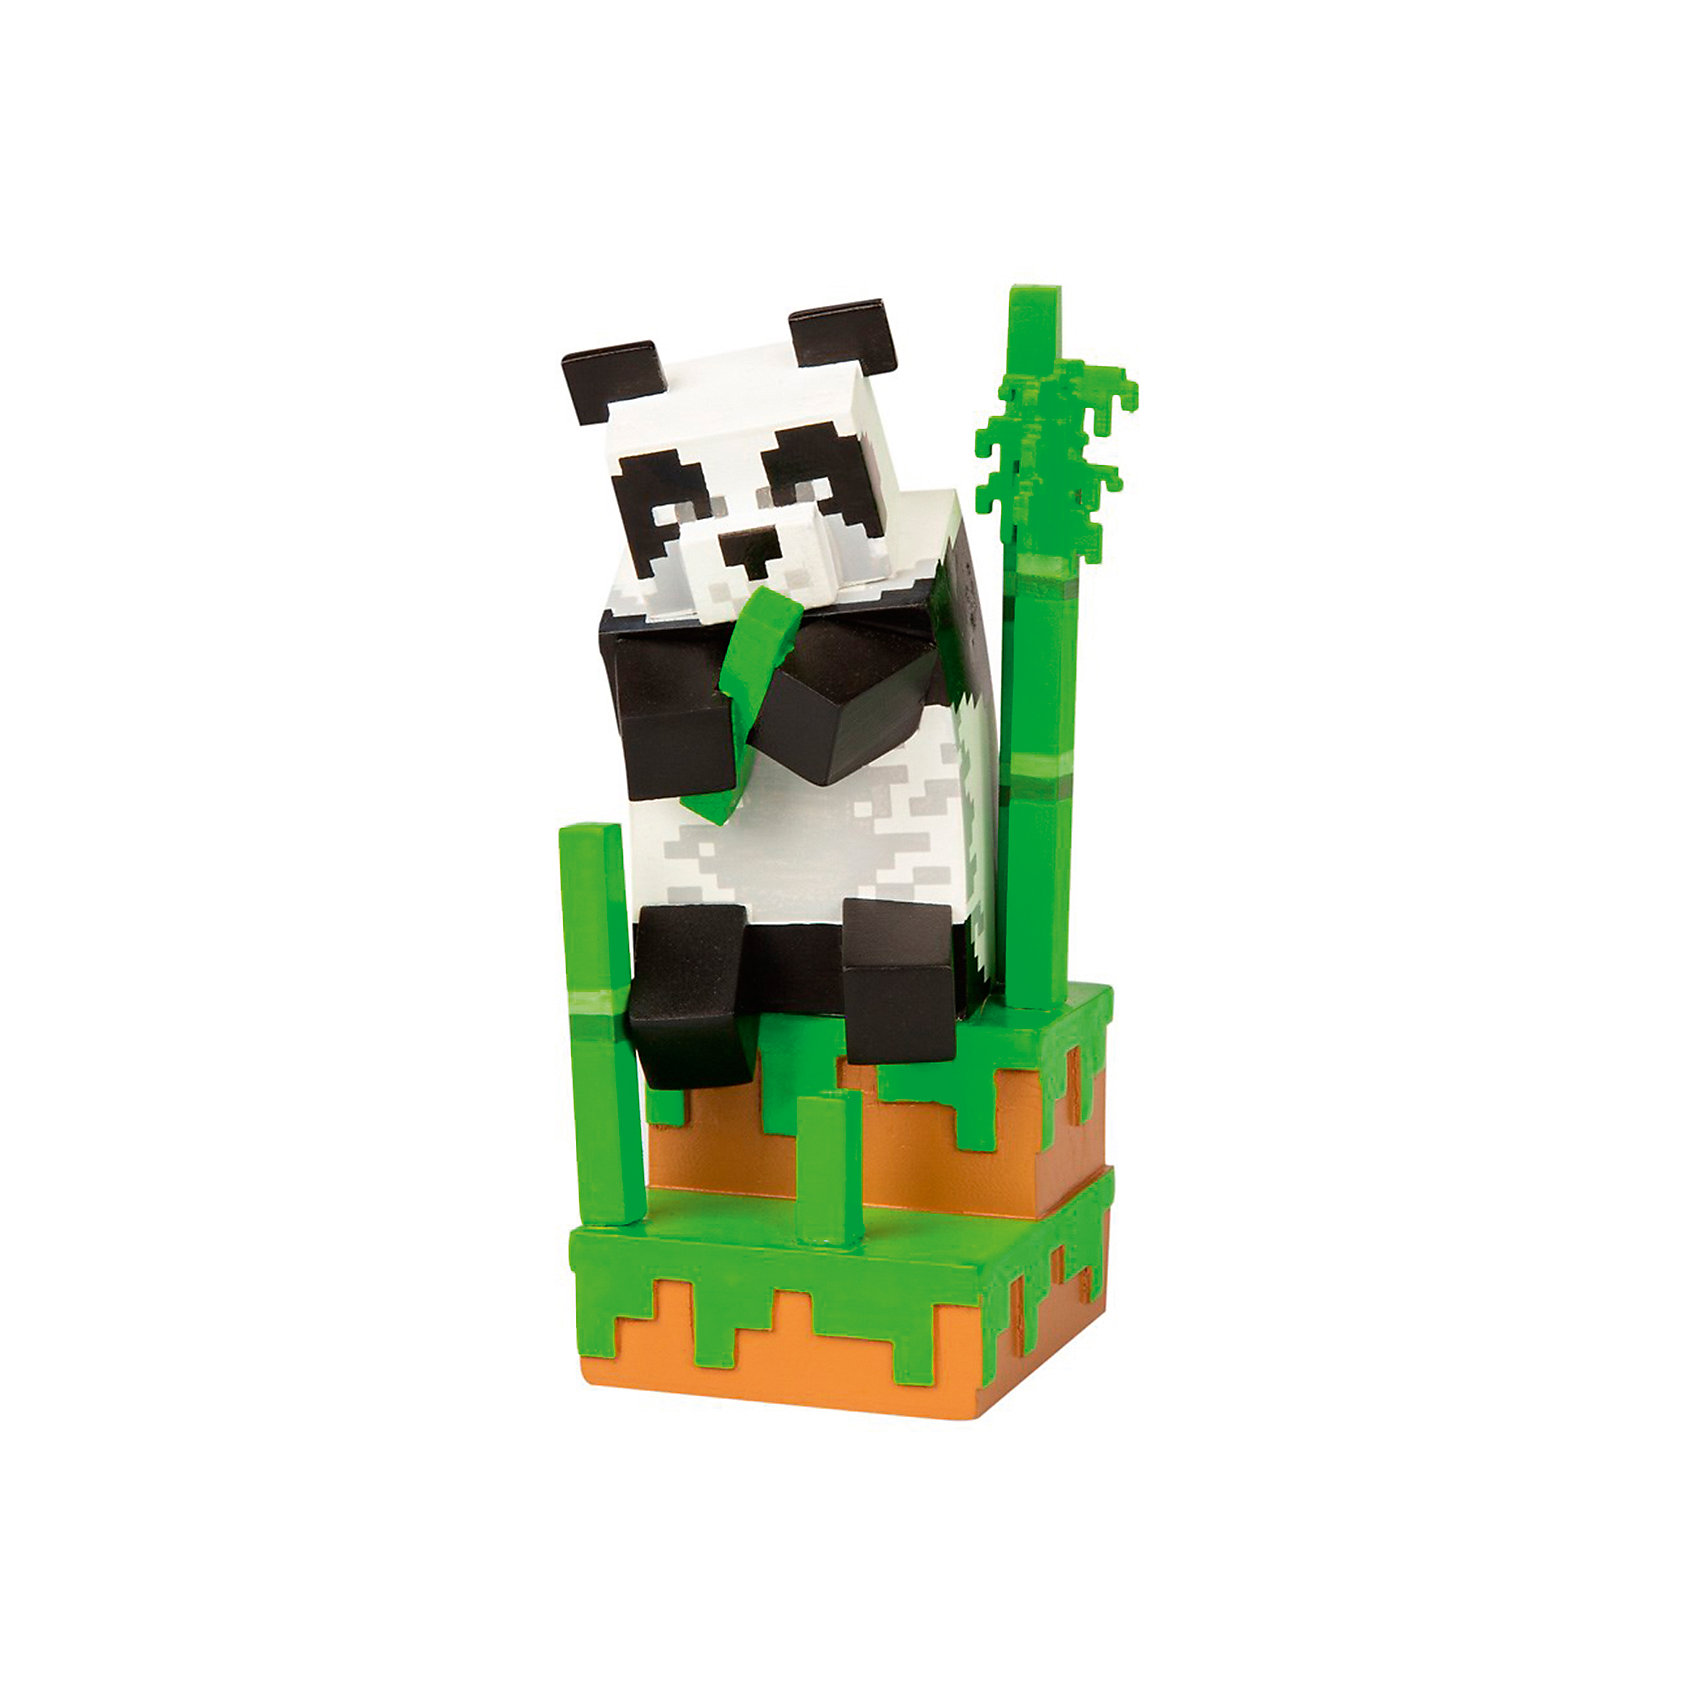 фото Фигурка minecraft adventure figures panda 4 серия, 10 см